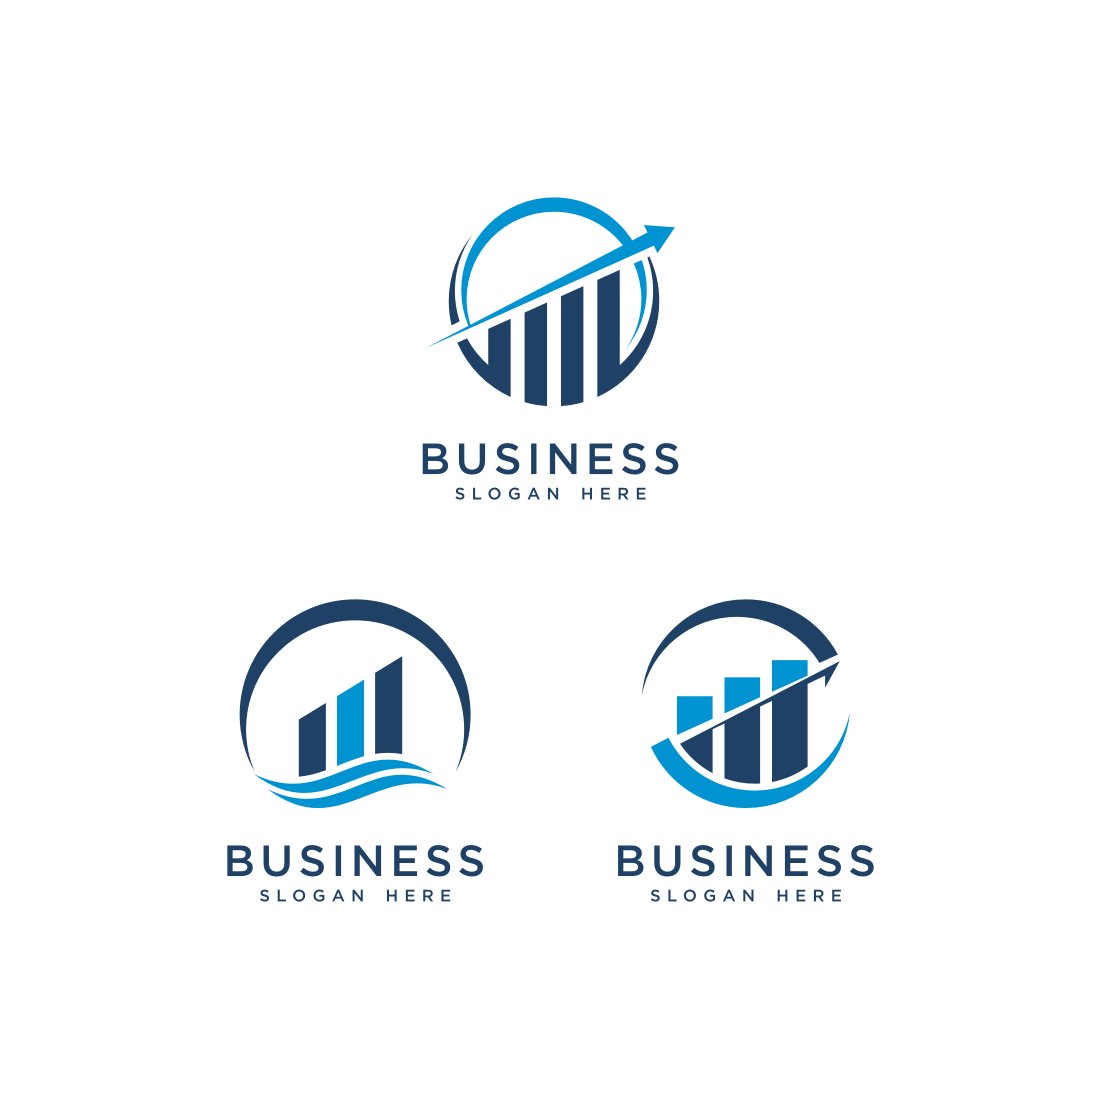 Business Finance Logo Vector Design main cover.